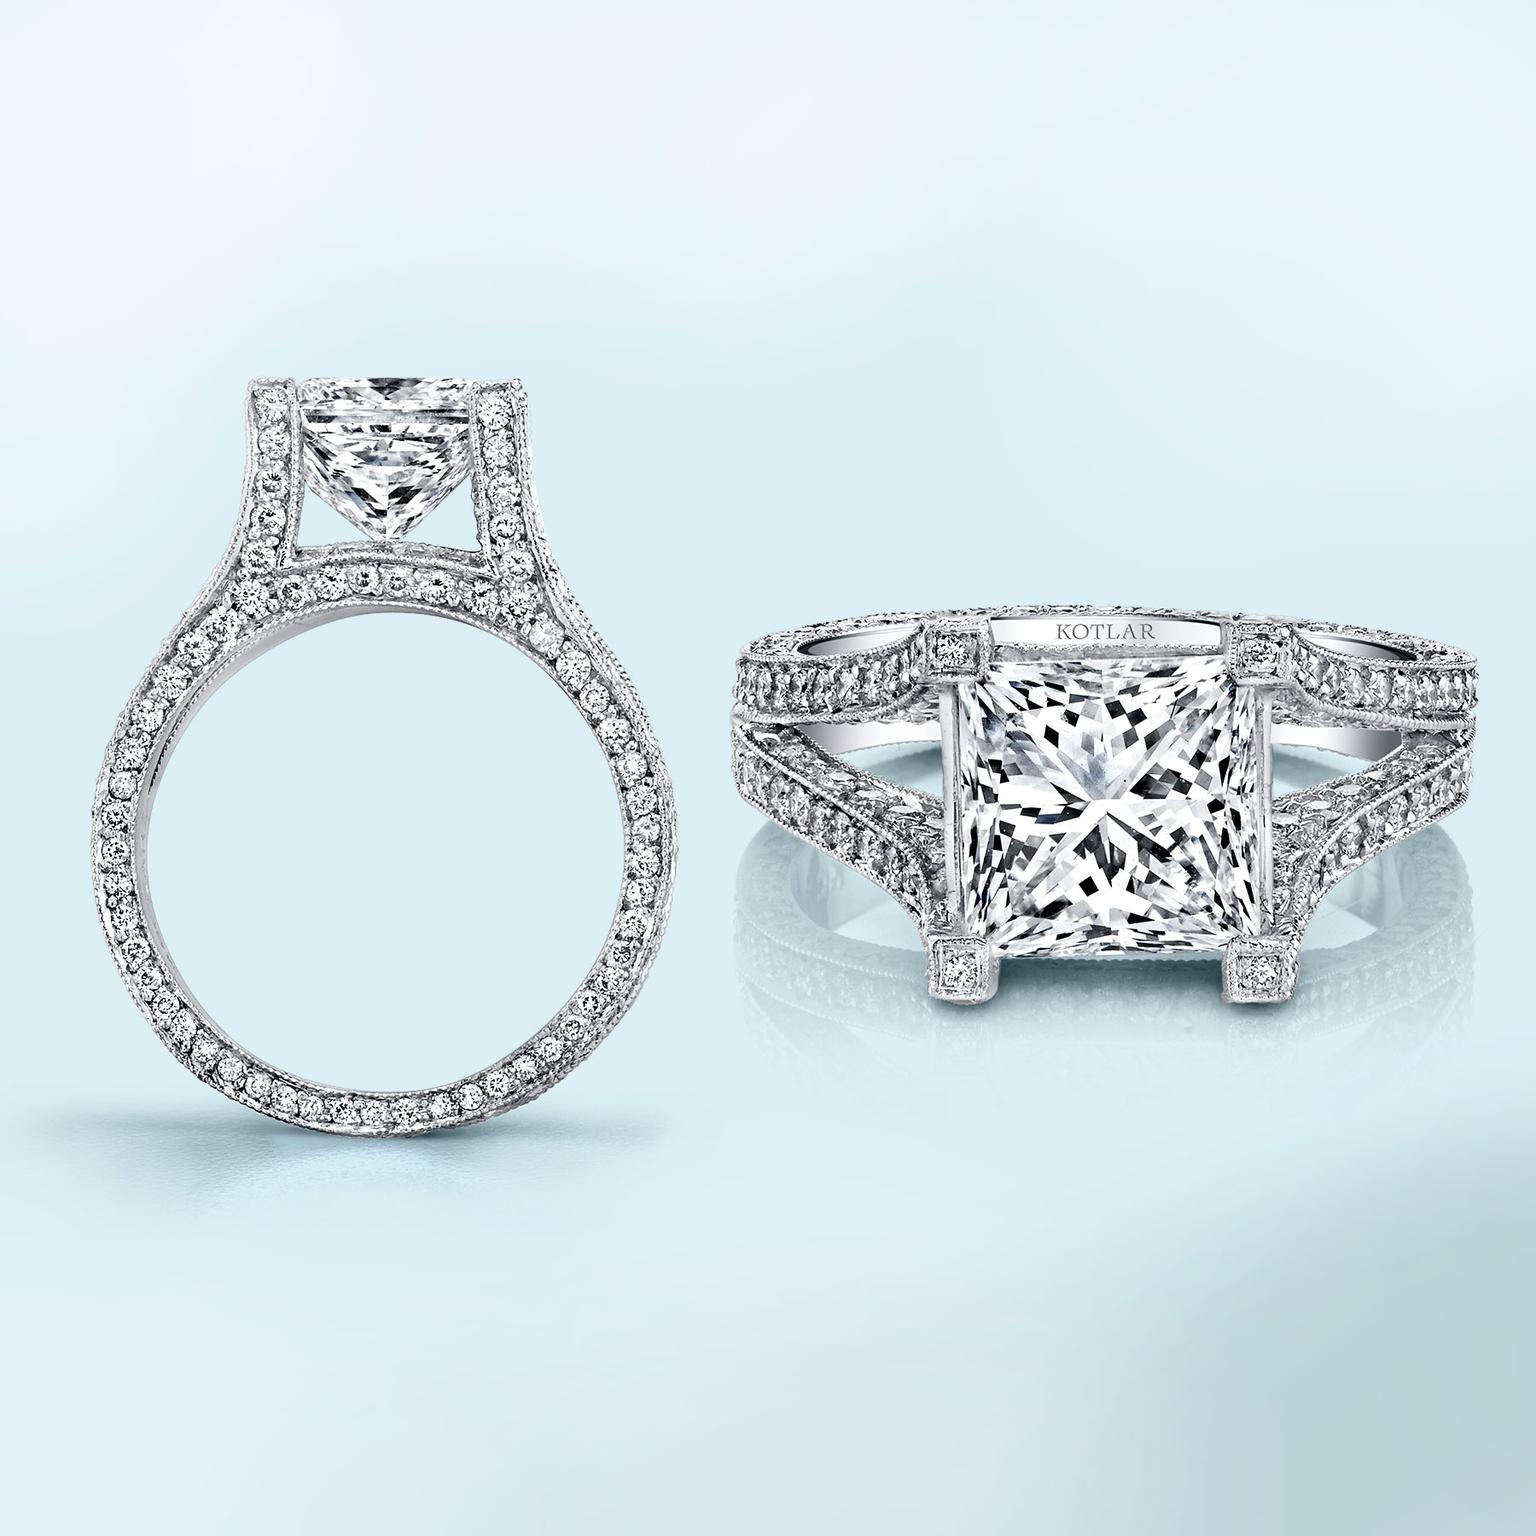 Gorgeous Tiffany's Jewelry: Lucida Cut and True Cut | The Diamond Oak